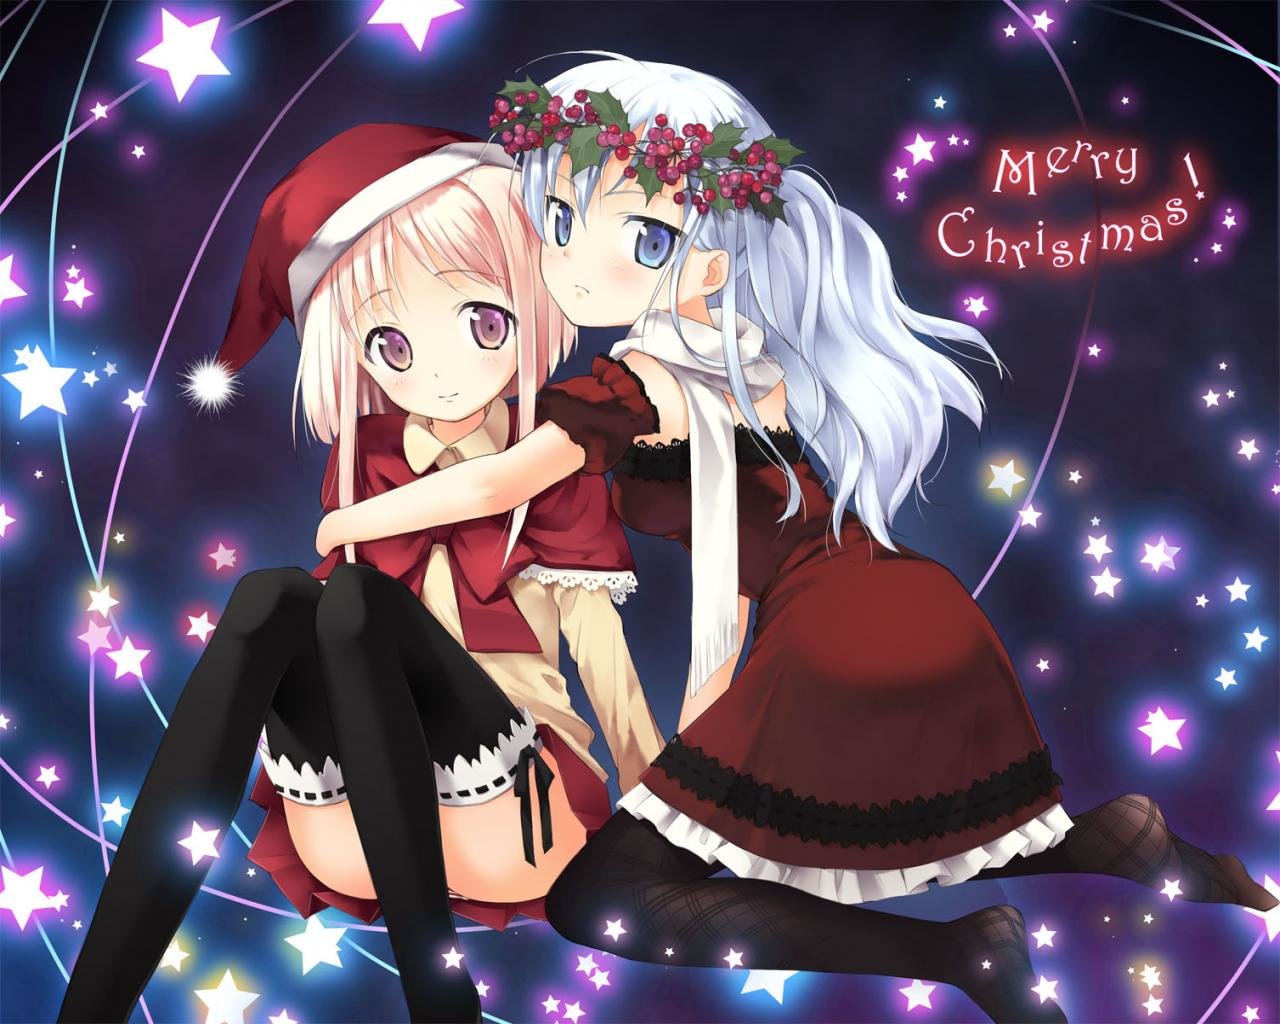 Christmas Anime wallpaper 1280x1024 desktop background